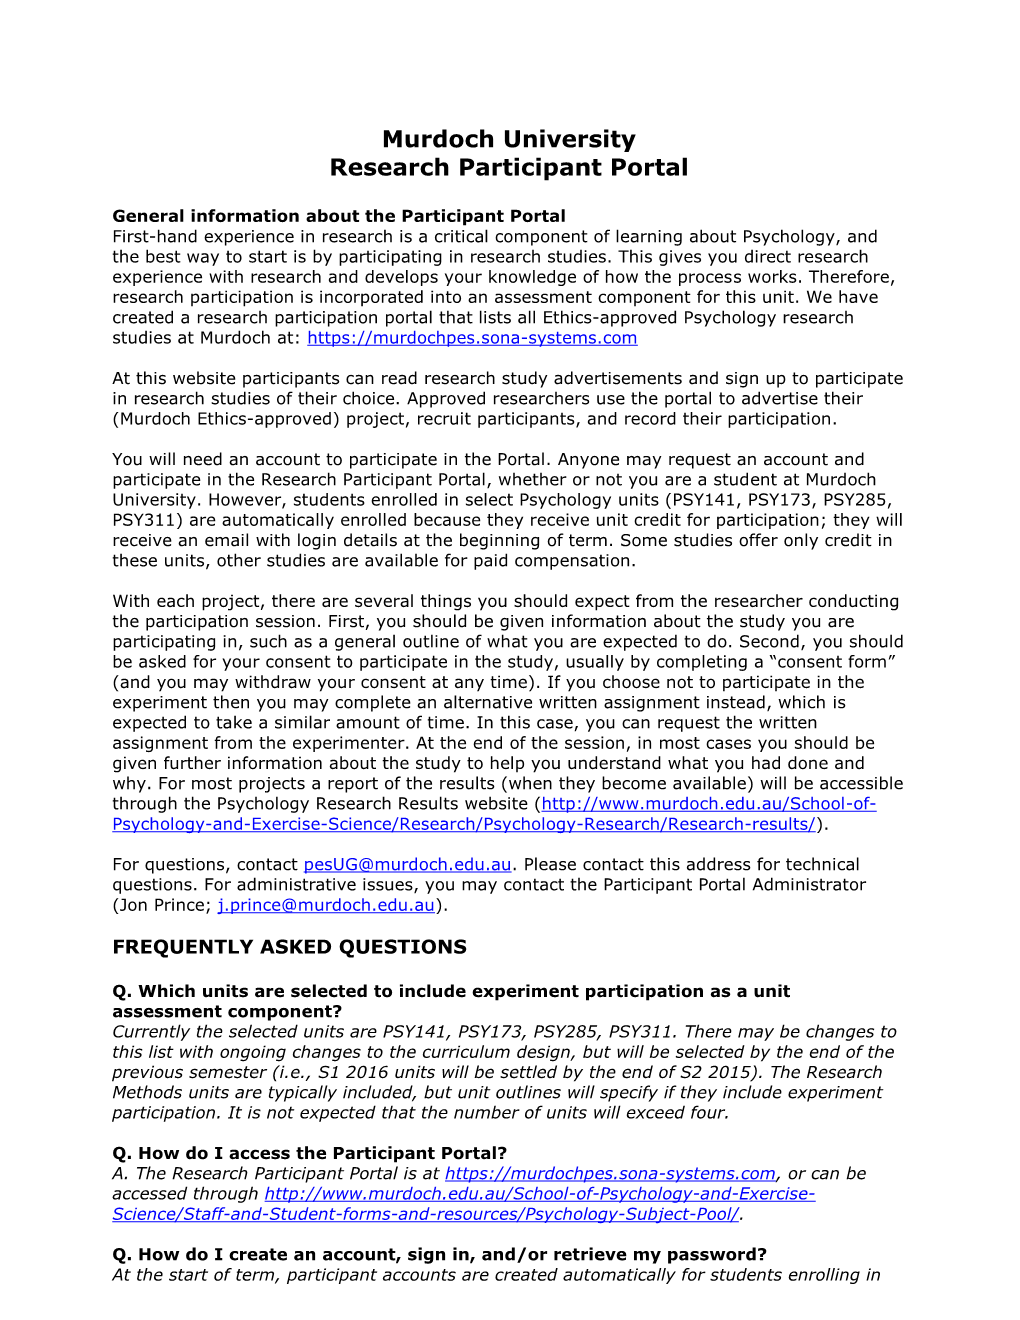 Murdoch University Research Participant Portal